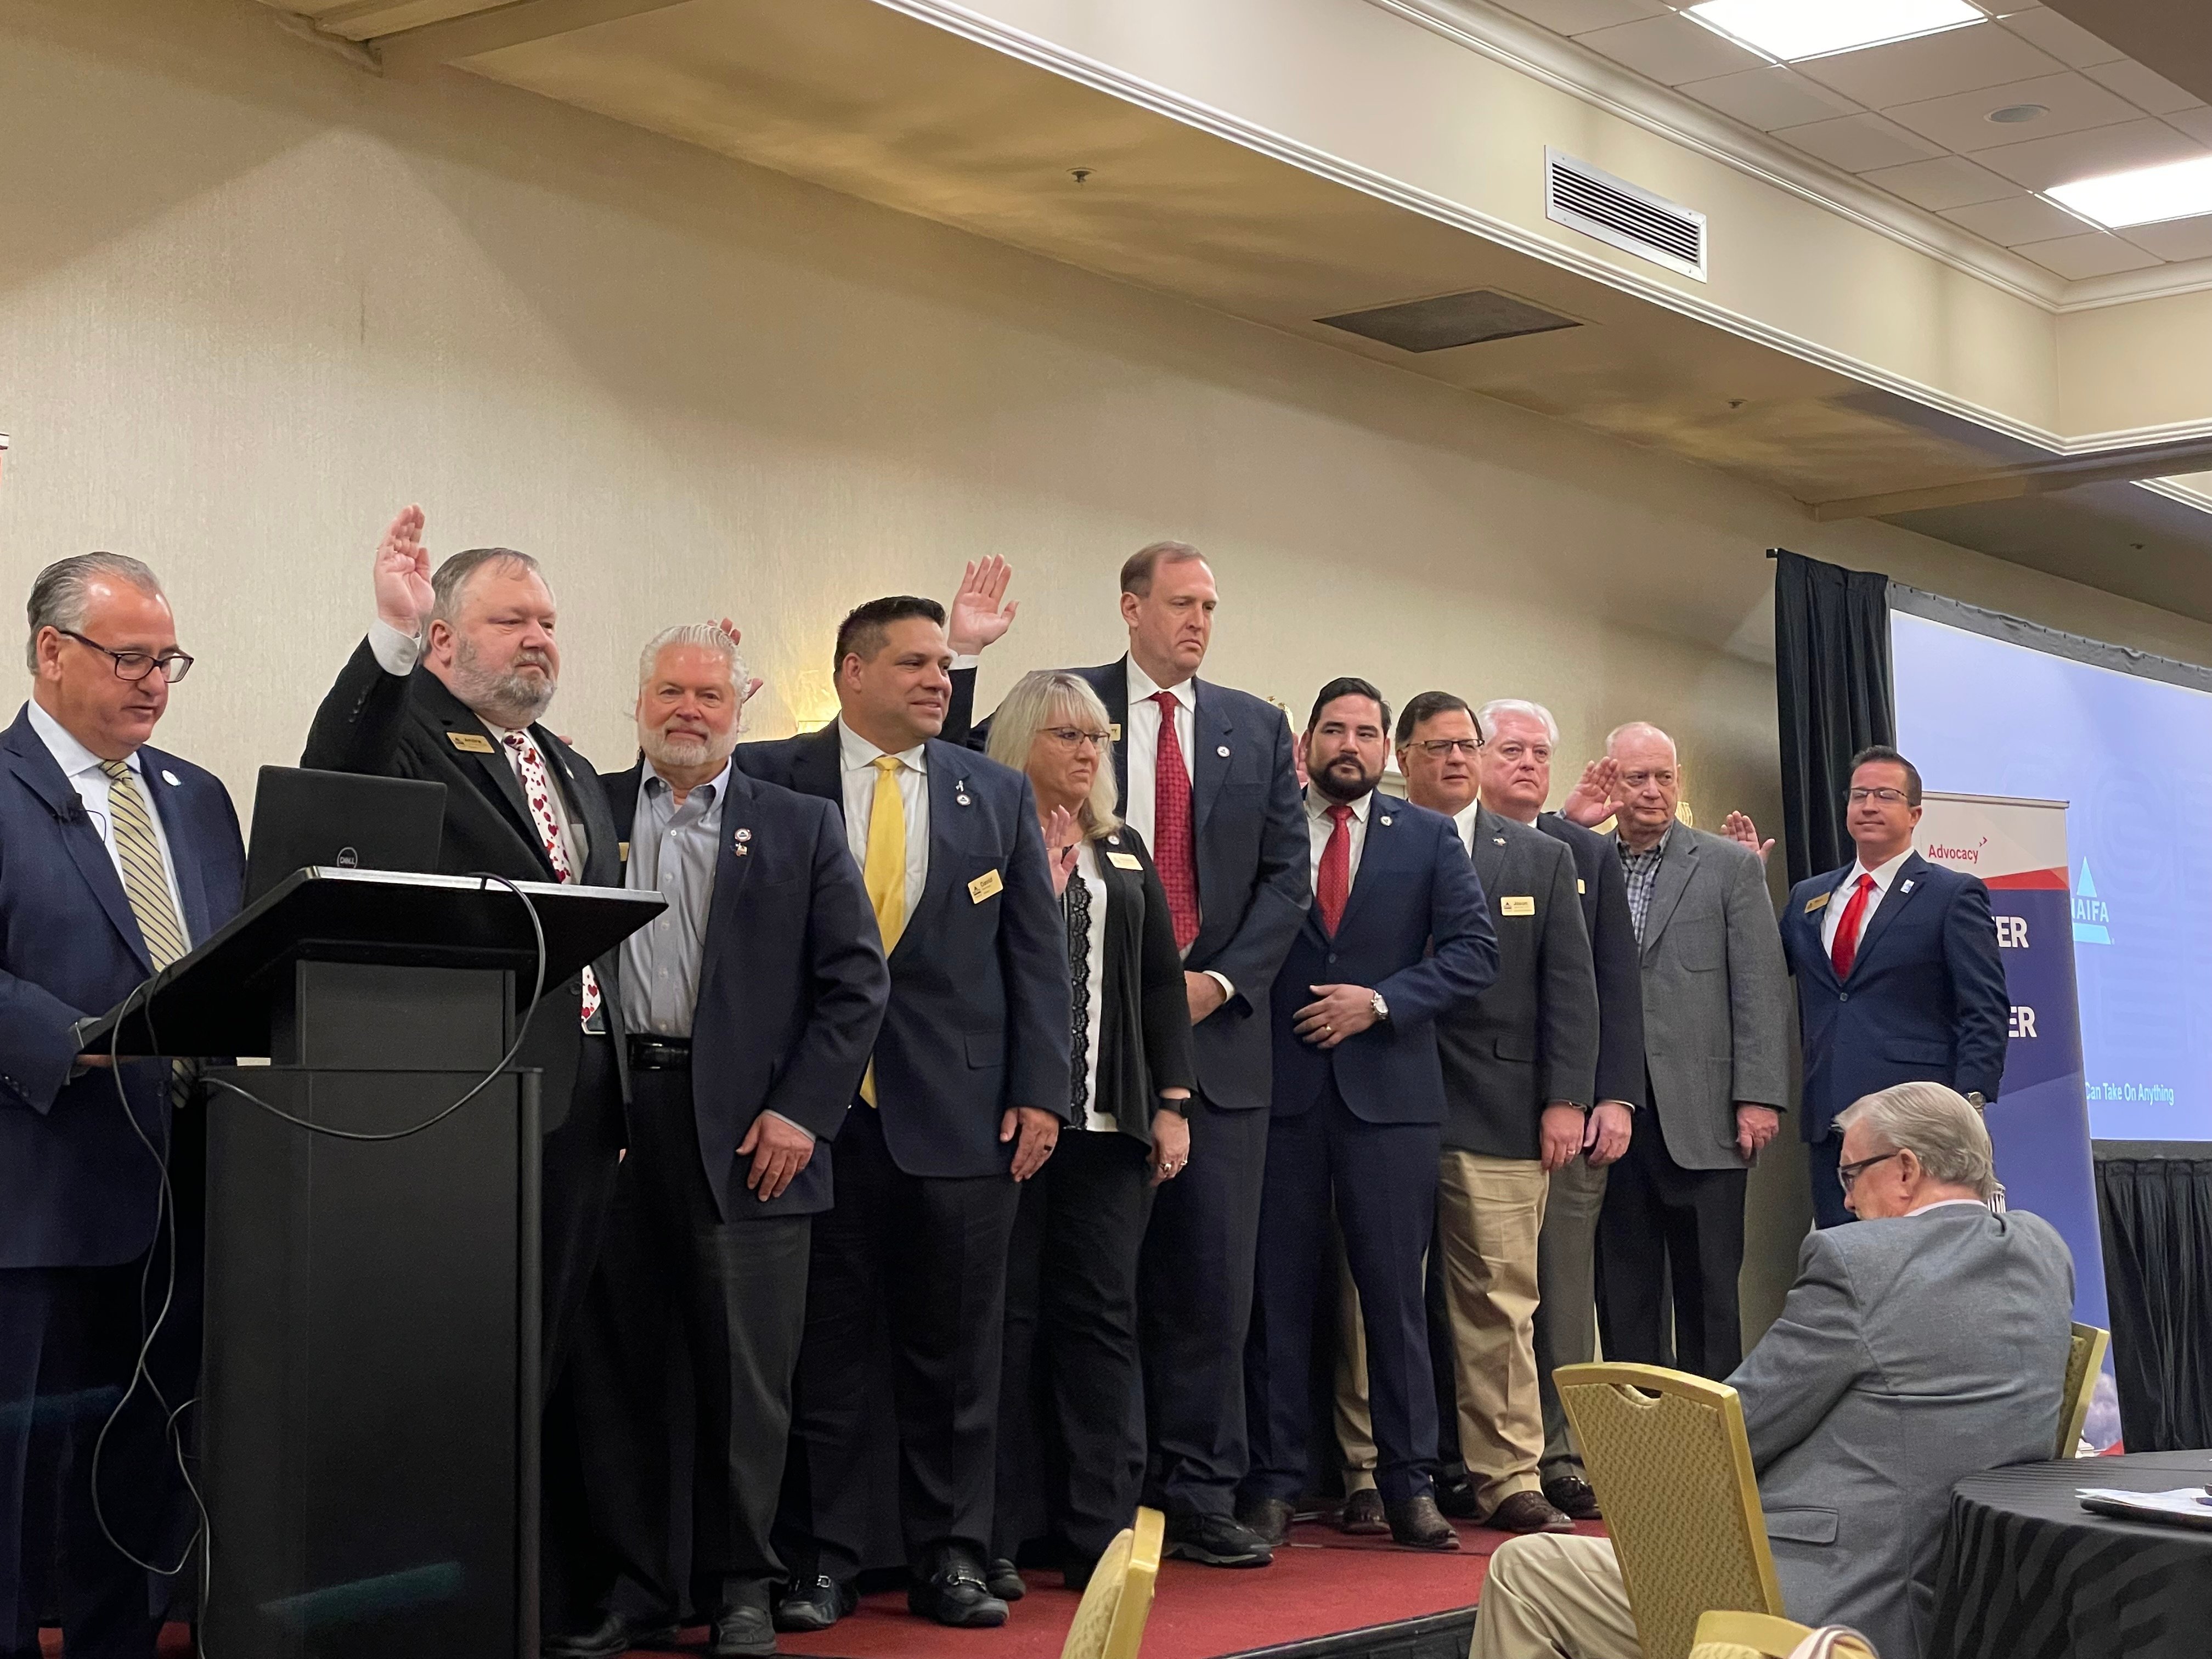 2022 NAIFA-Texas Board of Directors Swearing In Ceremony led by NAIFA National President Lawrence Holzberg